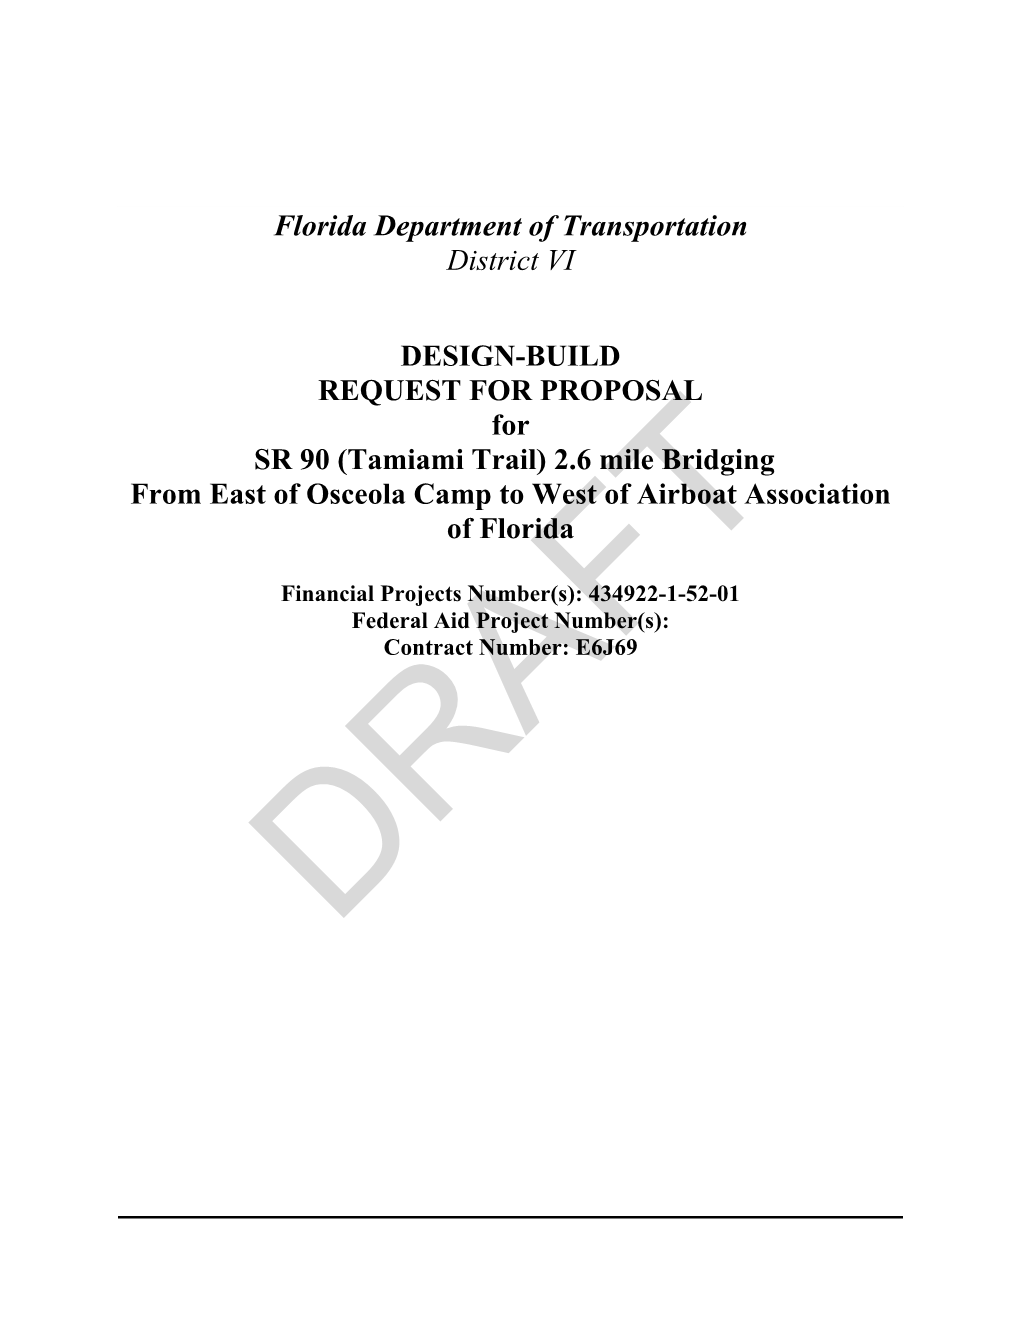 Florida Department of Transportation District VI DESIGN-BUILD